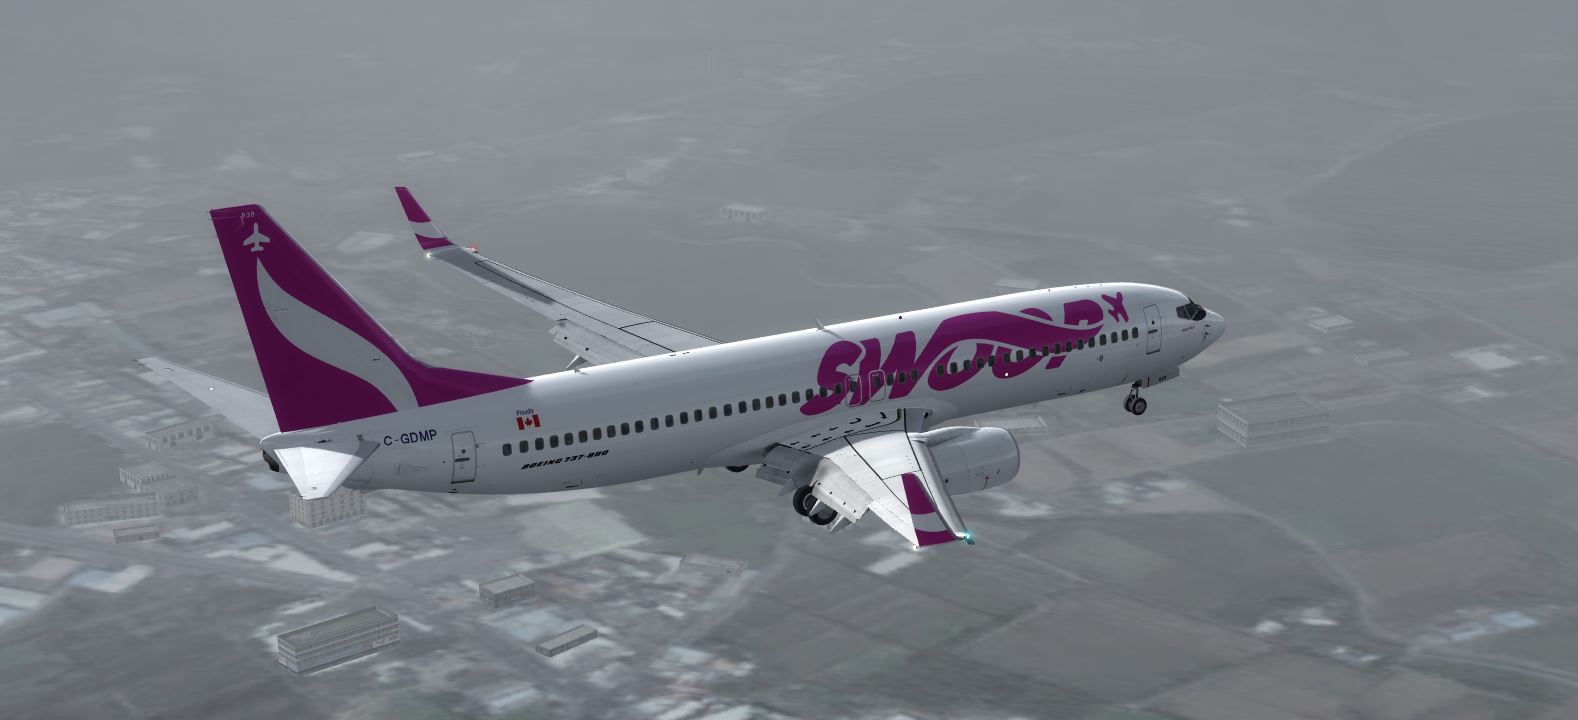 B737-800 Swoop Airlines-3484 